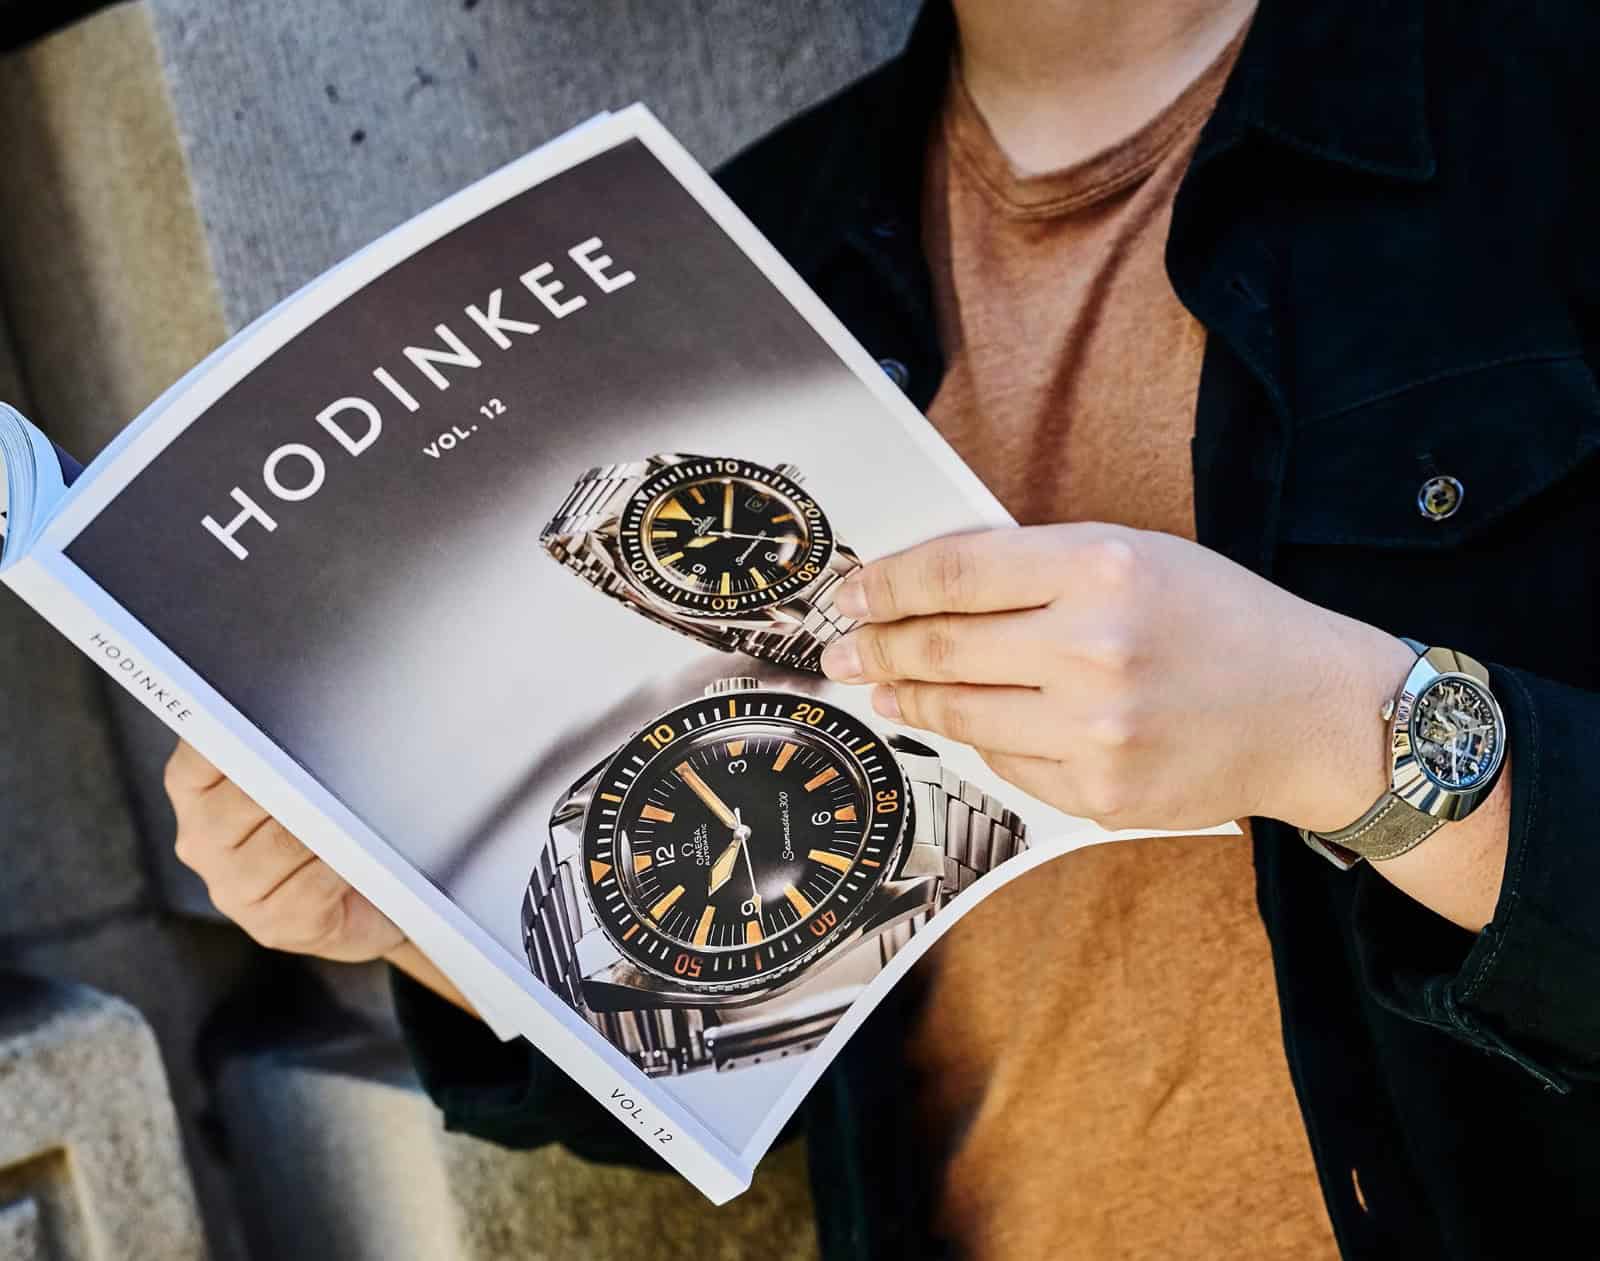 Hodinkee Magazin mit Hodinkee Sondermodell